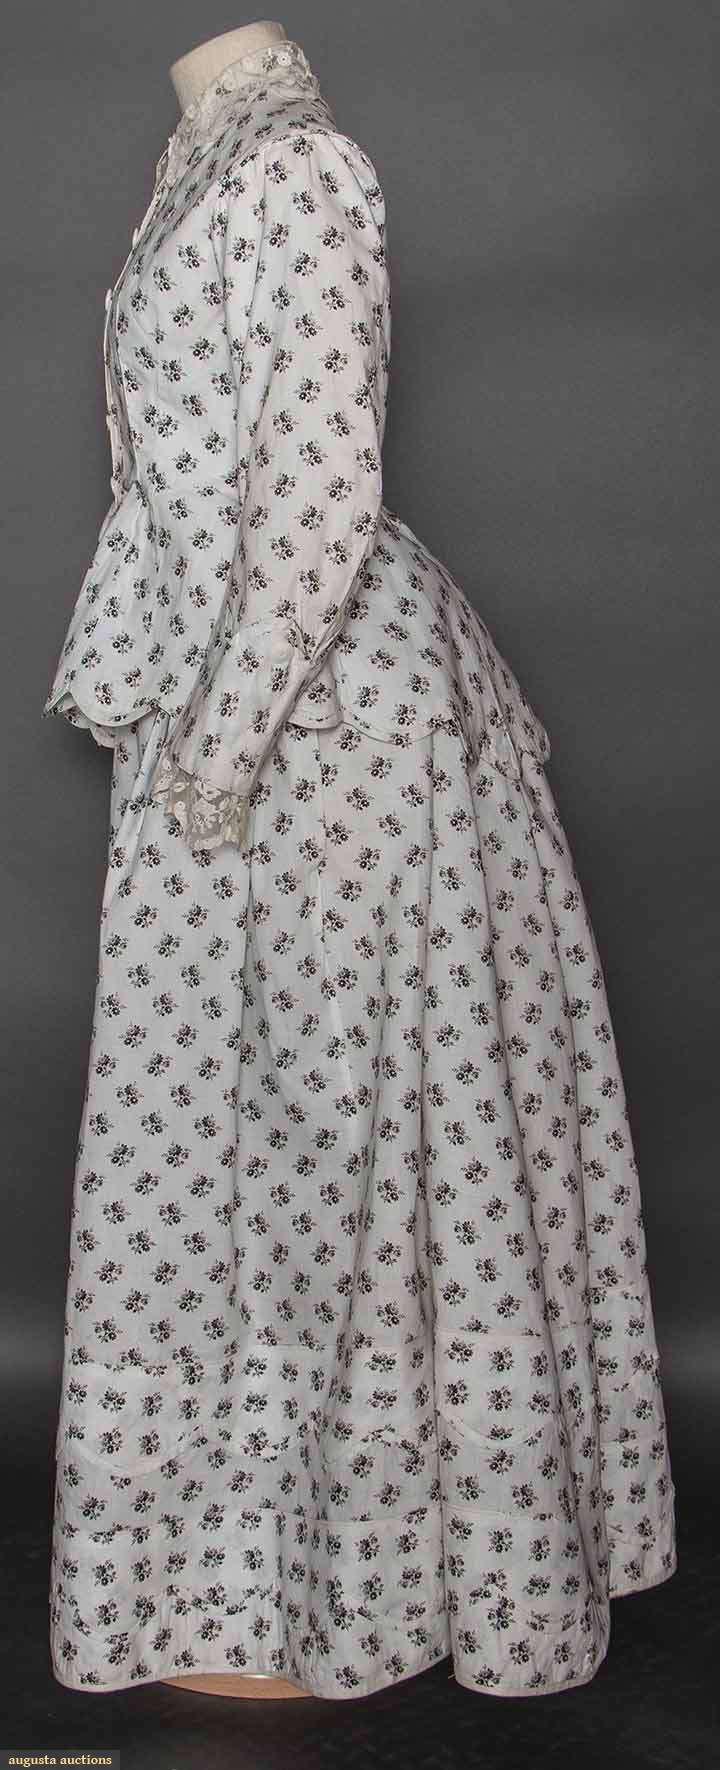 1870s dress